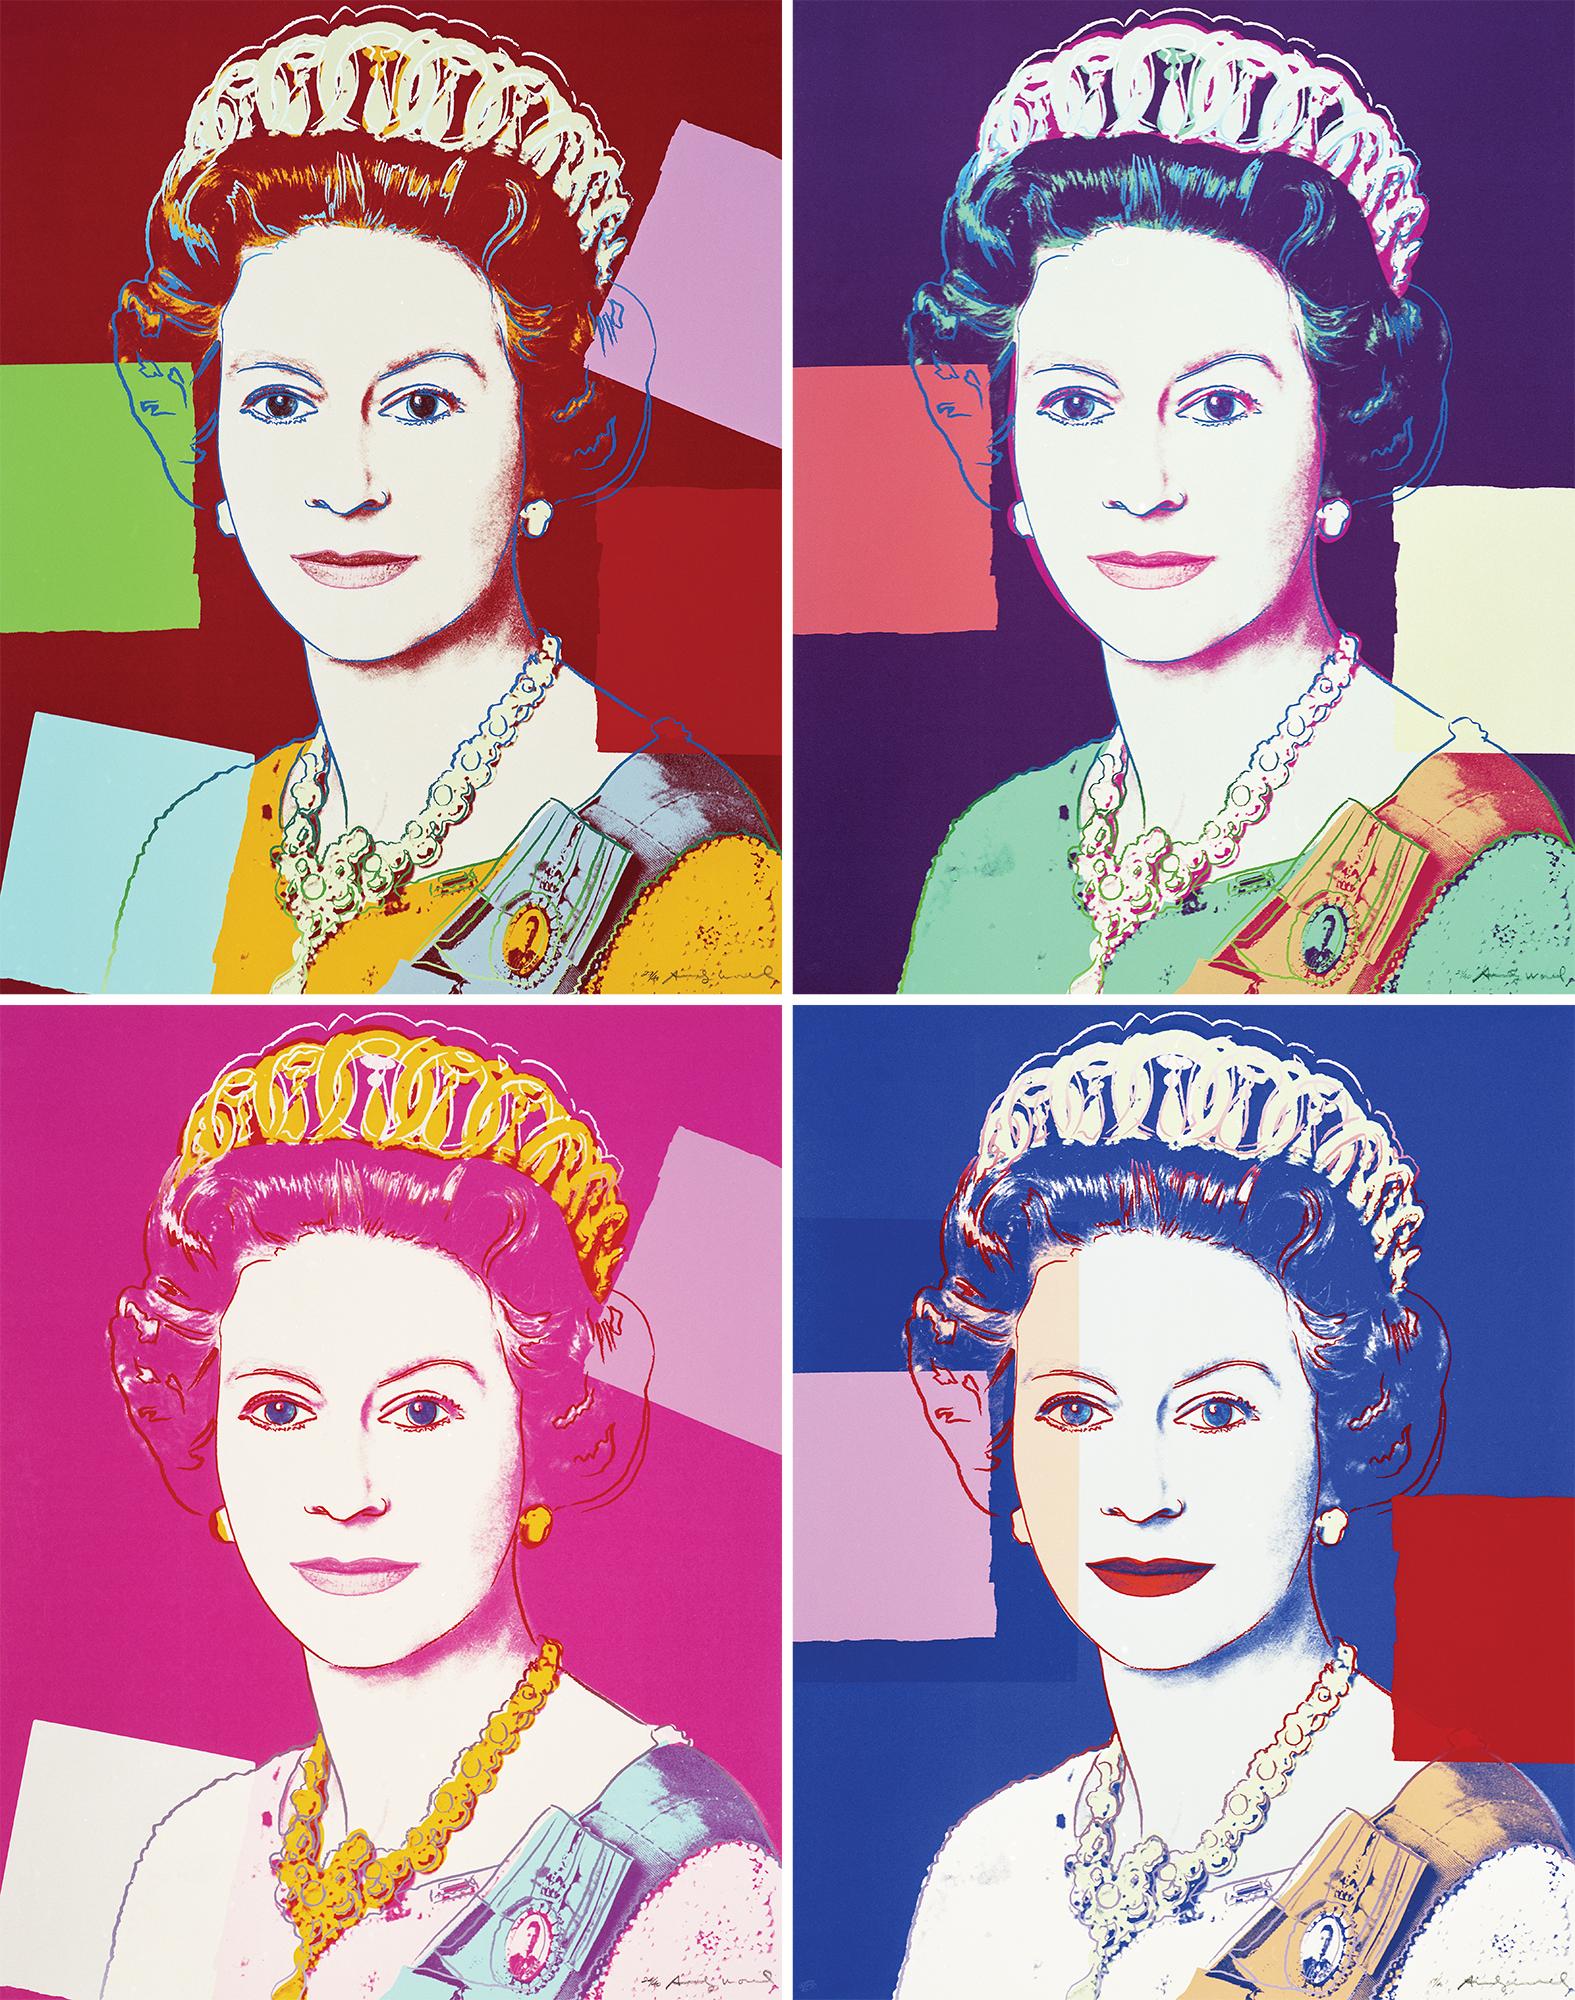 Andy Warhol Portrait Print - Queen Elizabeth II Of The United Kingdom Complete Portfolio (Reigning Queens)